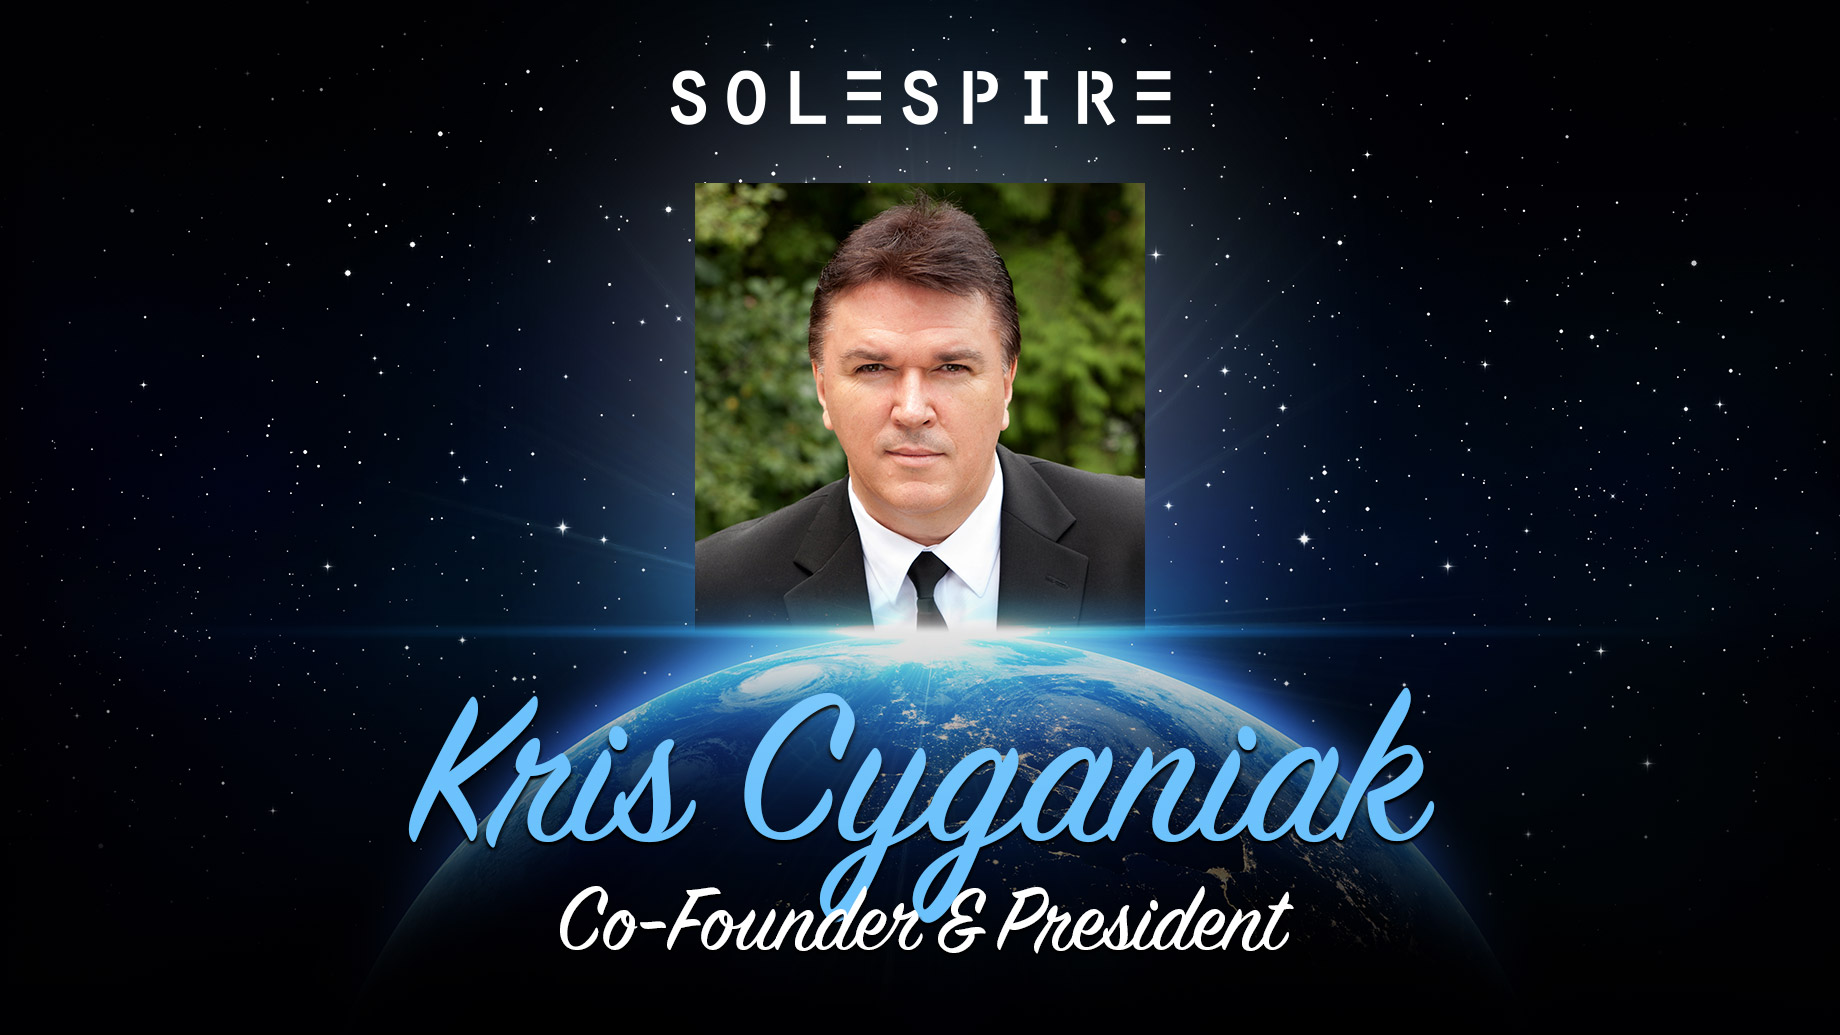 Kris Cyganiak – Solespire Co-Founder & President